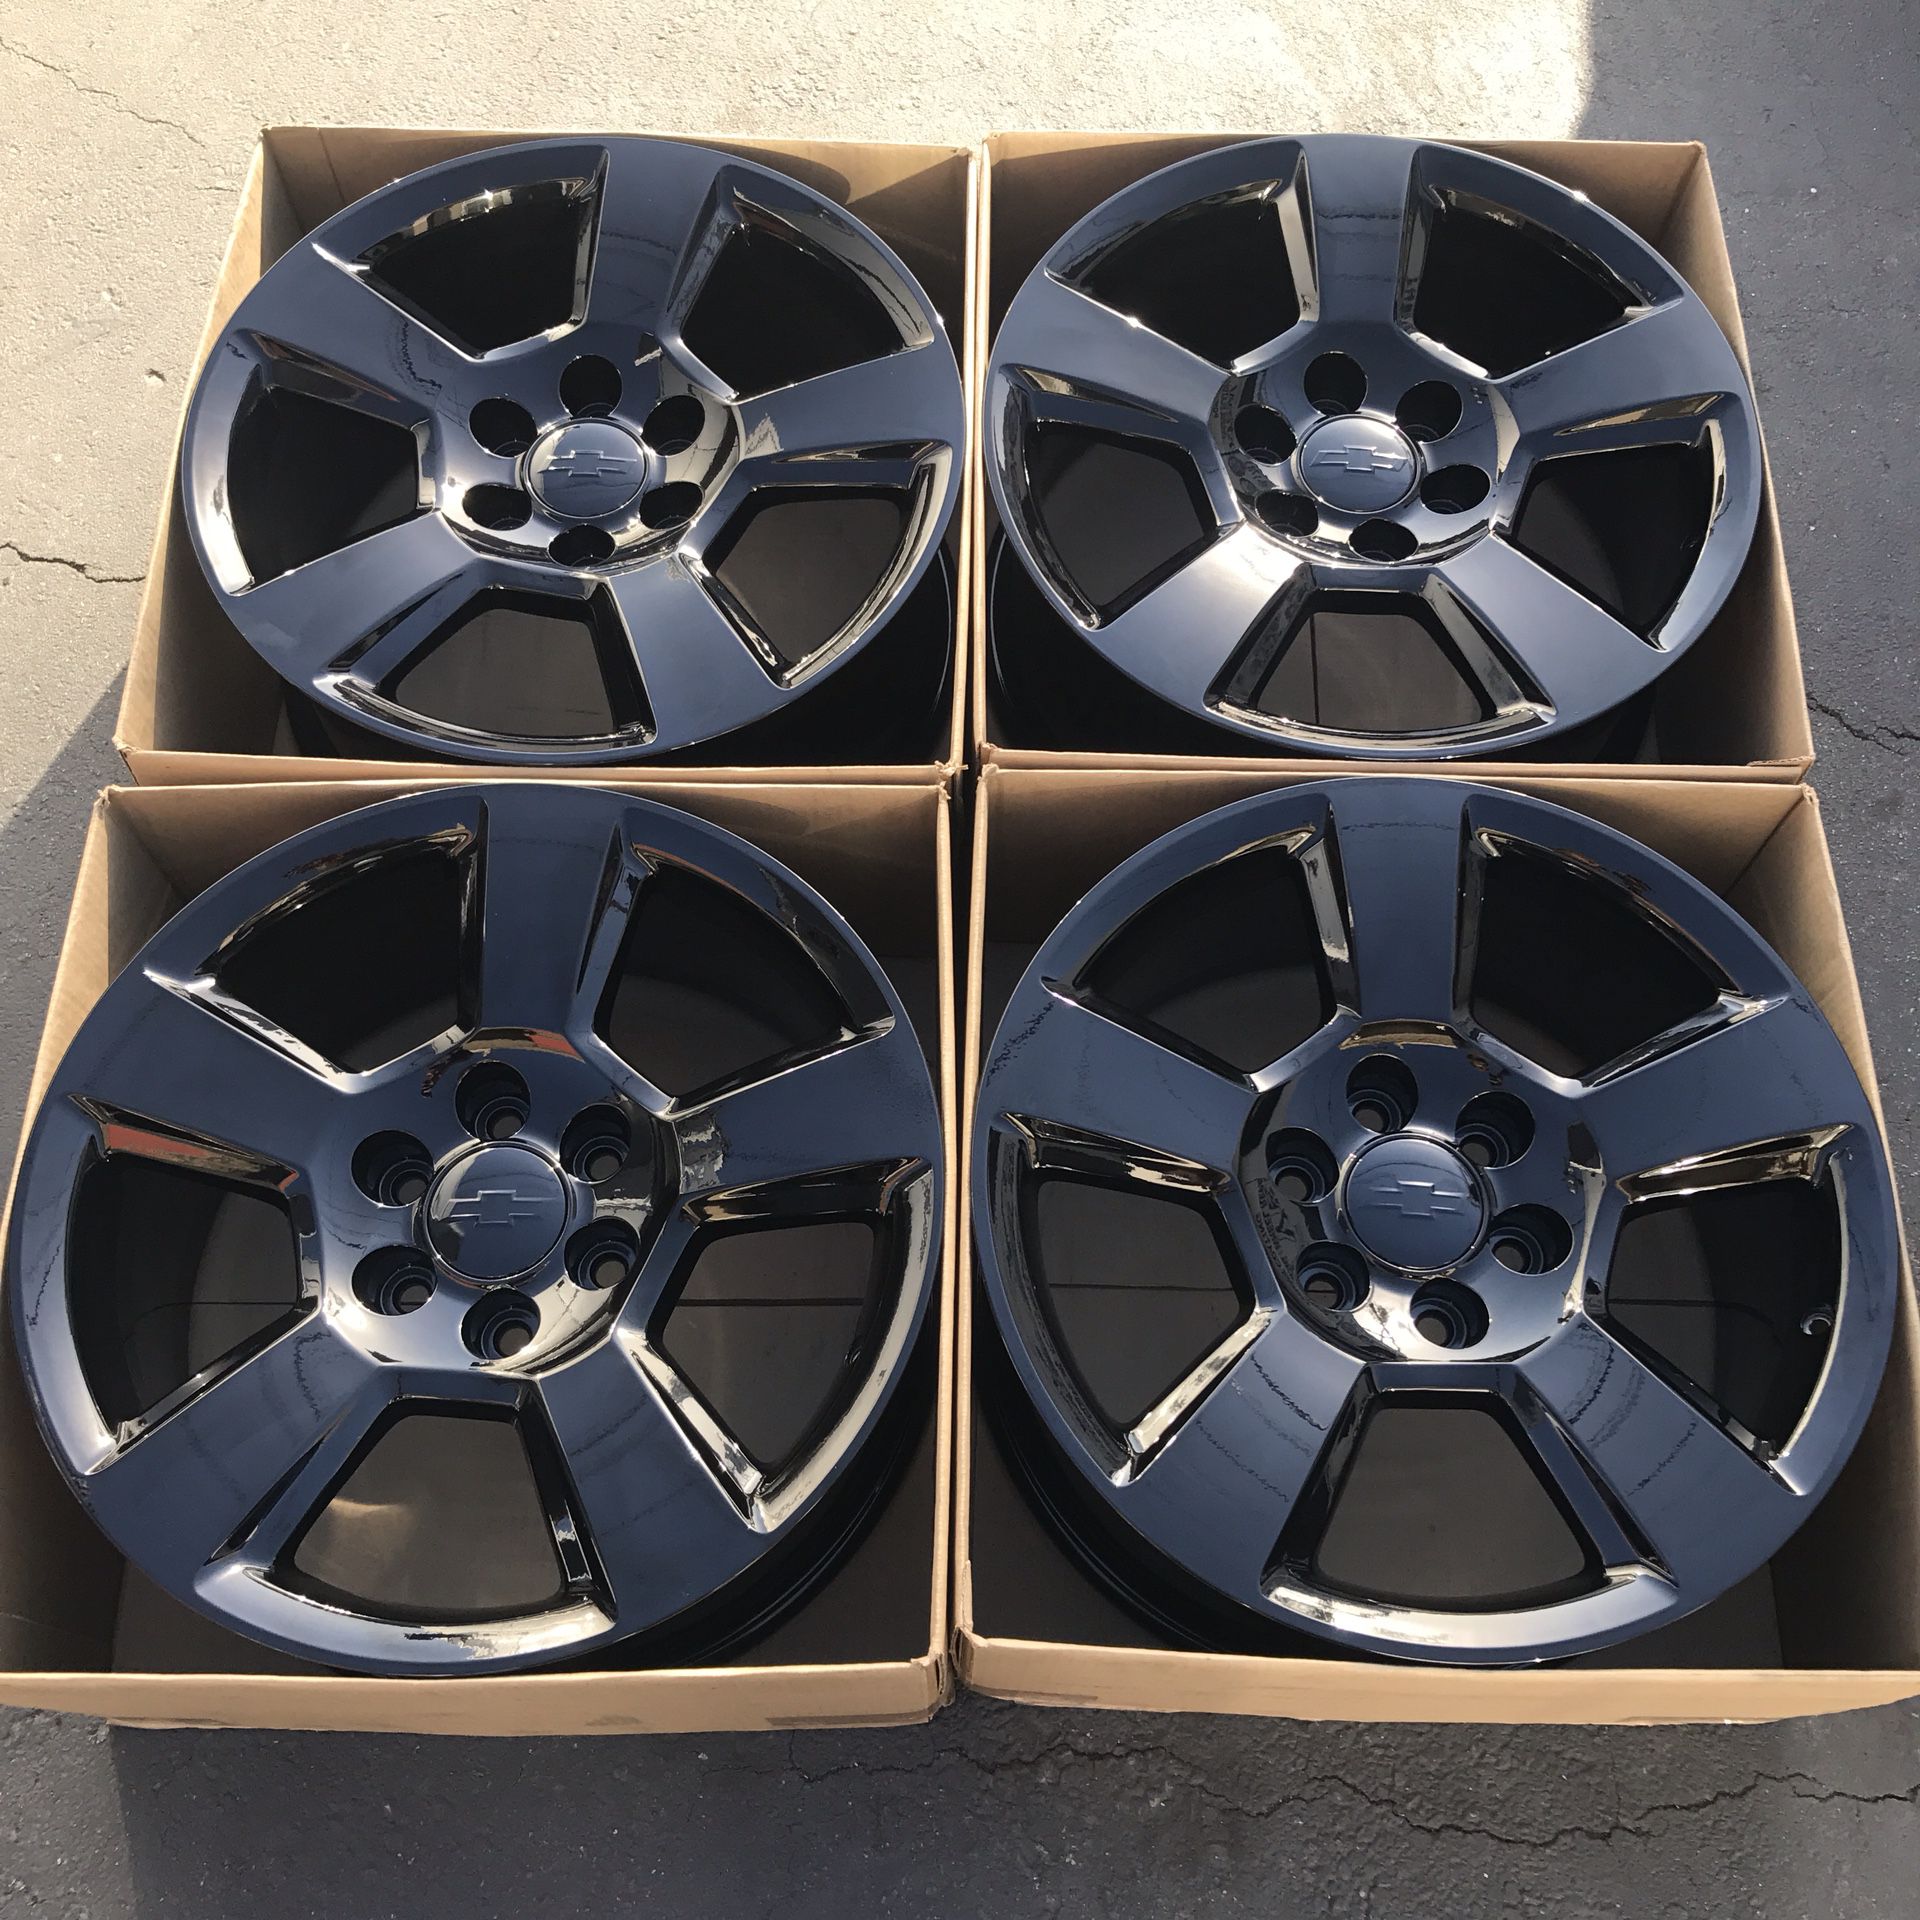 20” oem Chevy Silverado factory wheels 20 inch gloss black rims Chevrolet Silverado